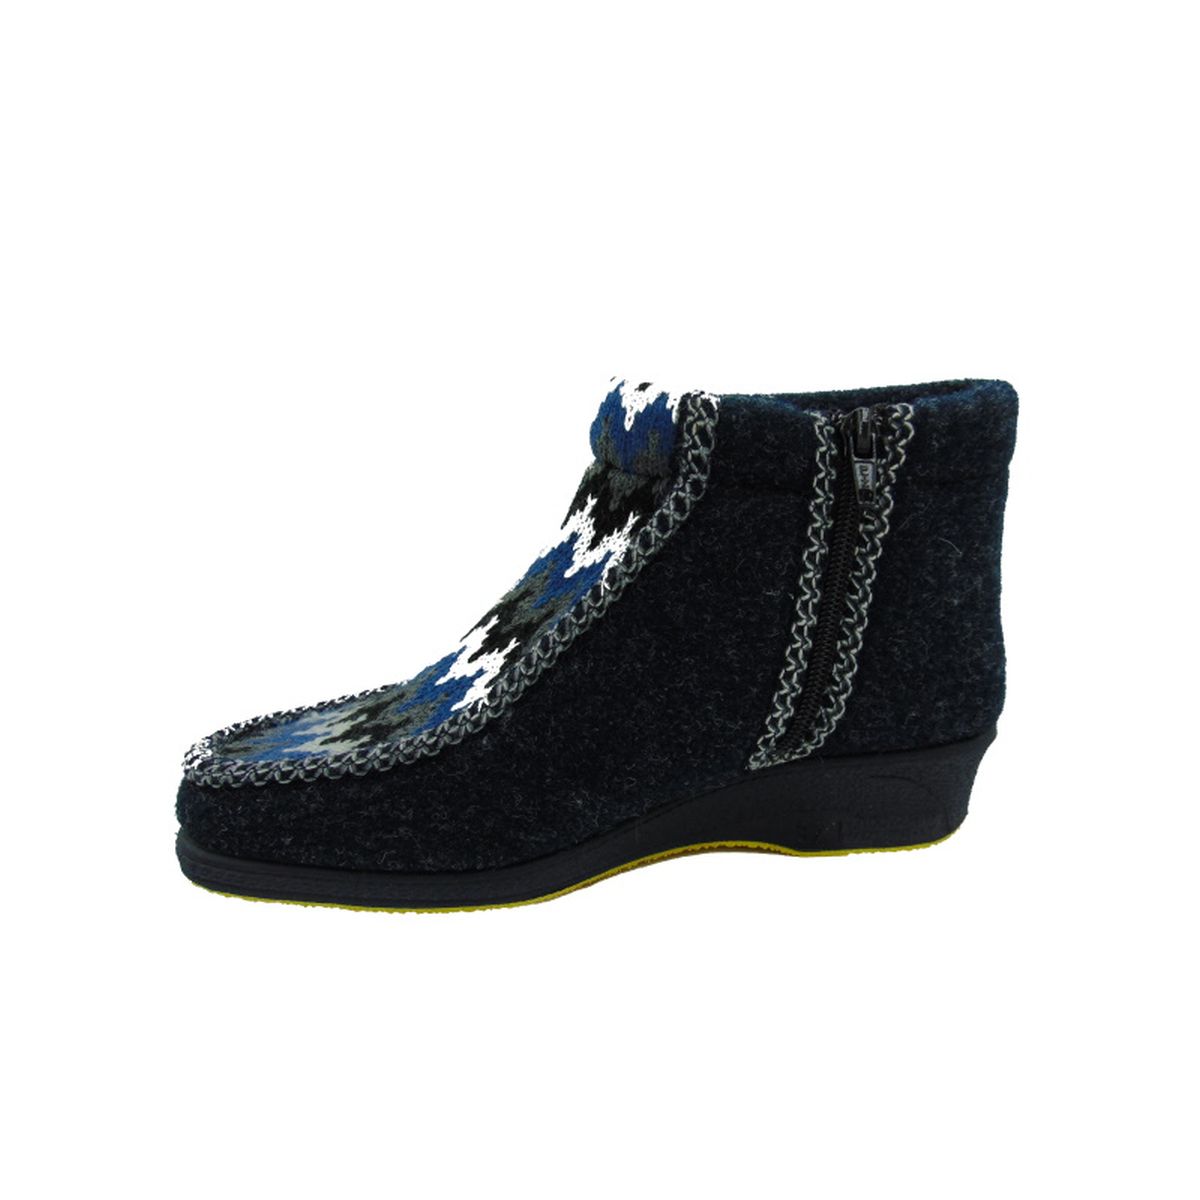 Pantofola Donna con zip, interno in lana Emanuela 507 Blu